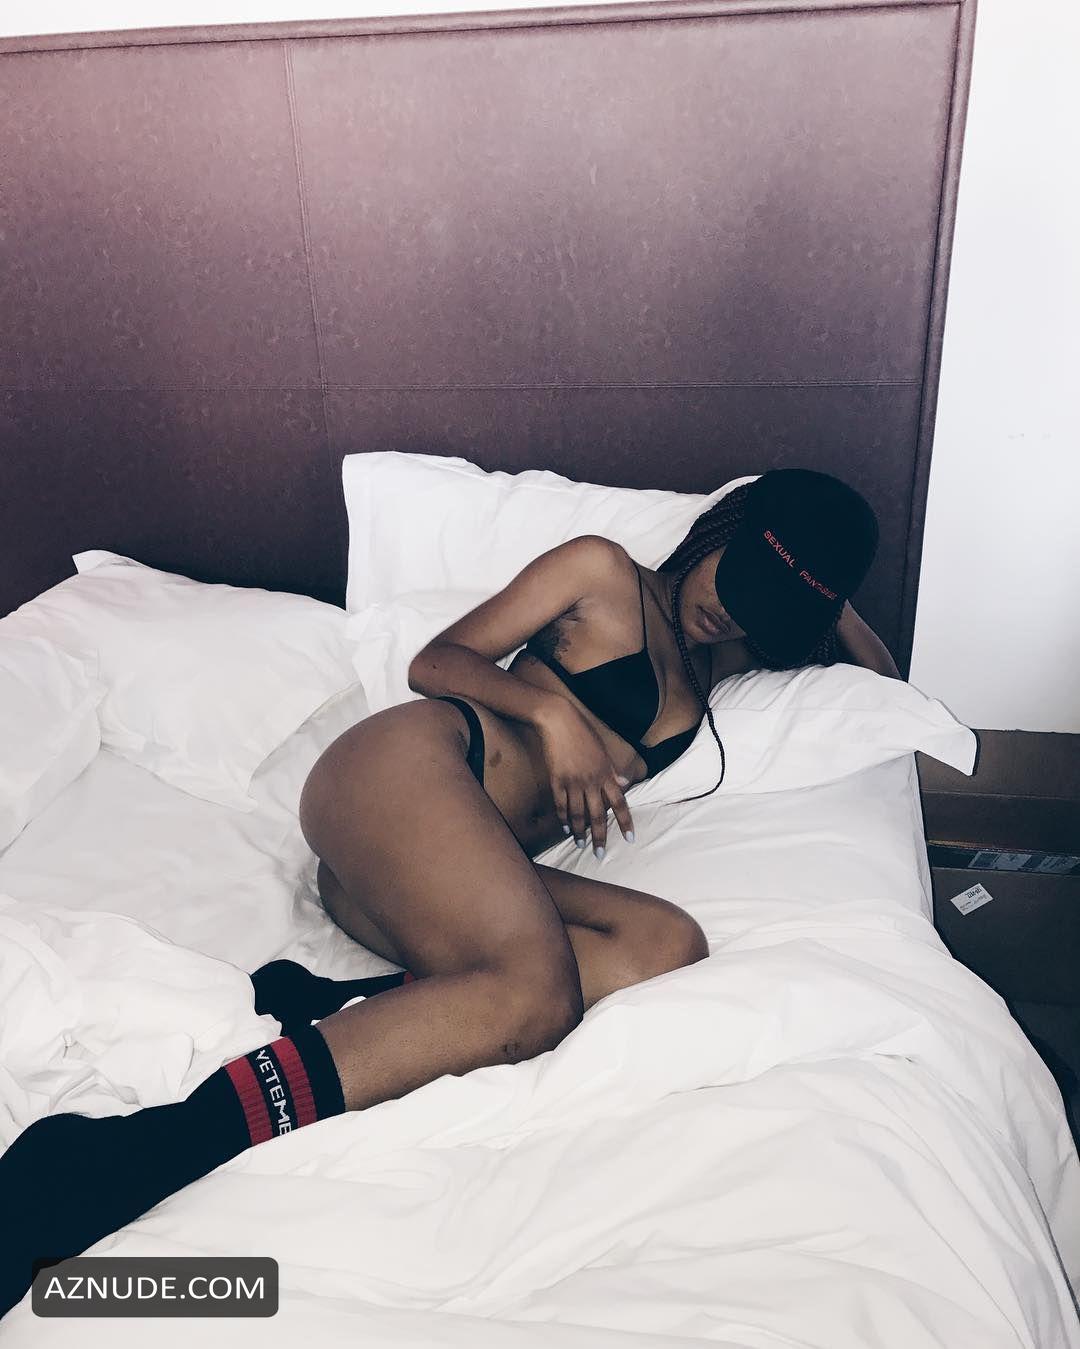 Keke Palmer Sexy In A Bed On Instagram Aznude